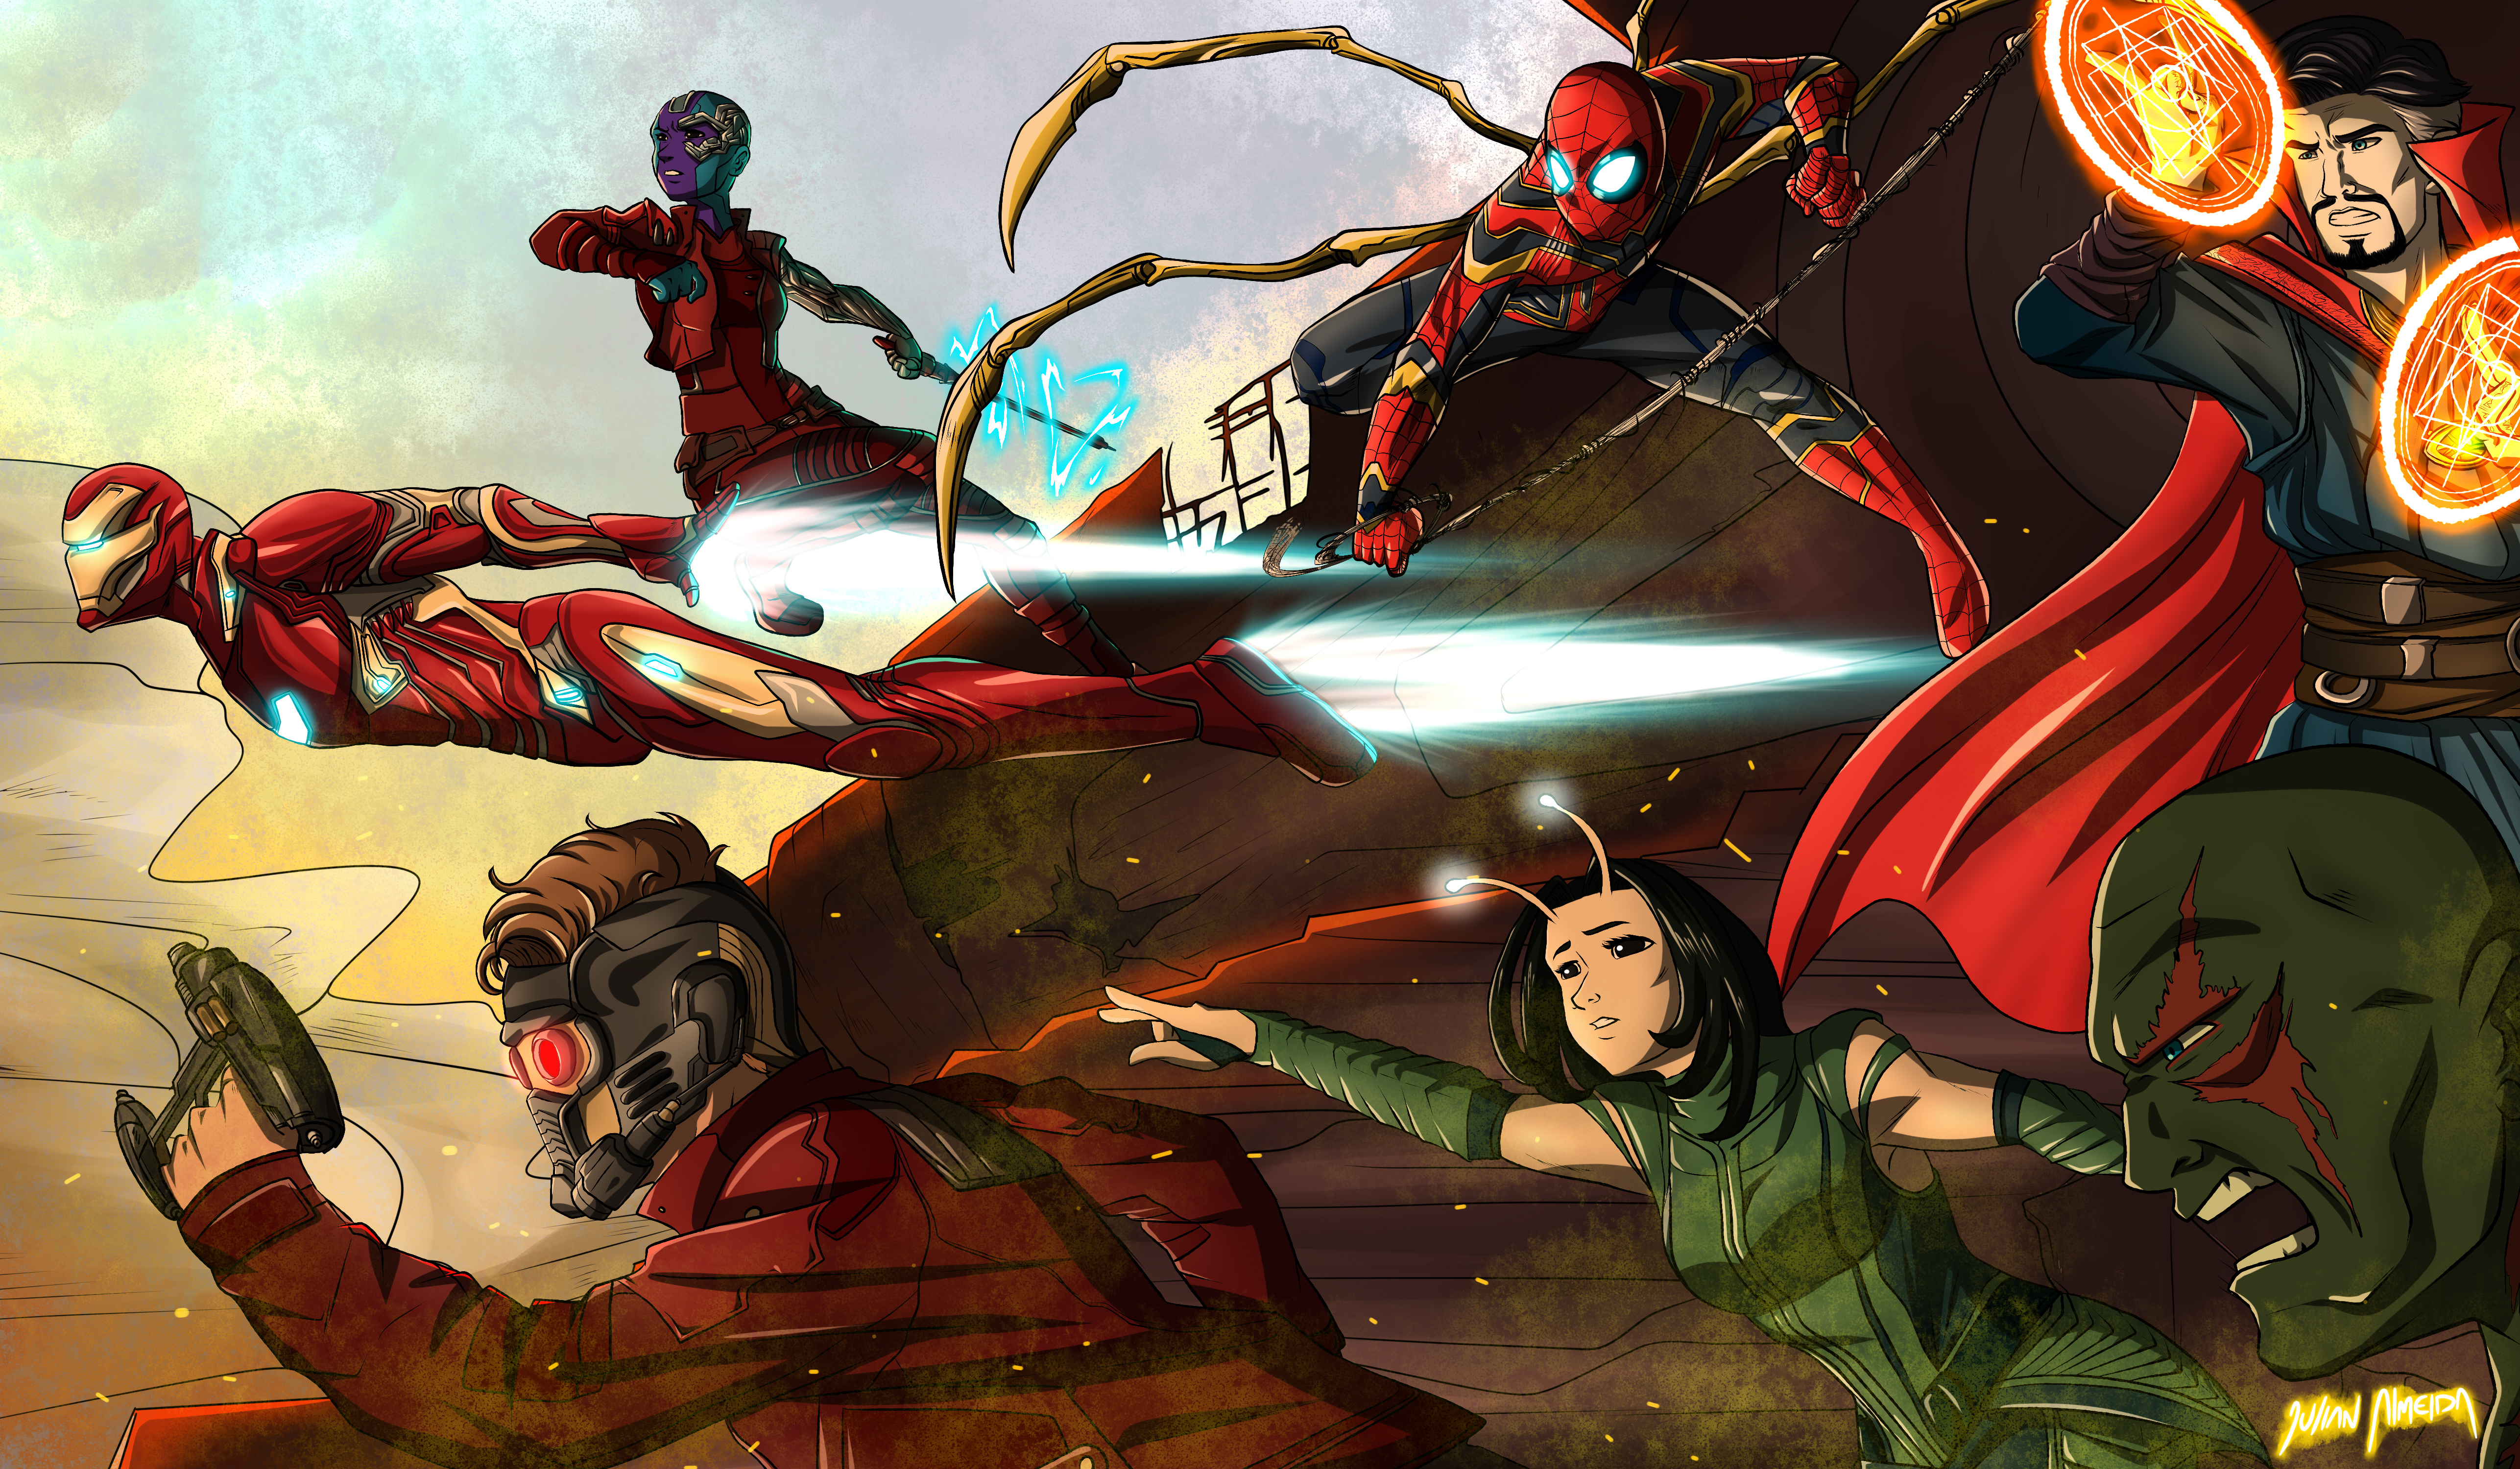 Team Wild Avengers Infinity War Fandango Poster Wallpapers